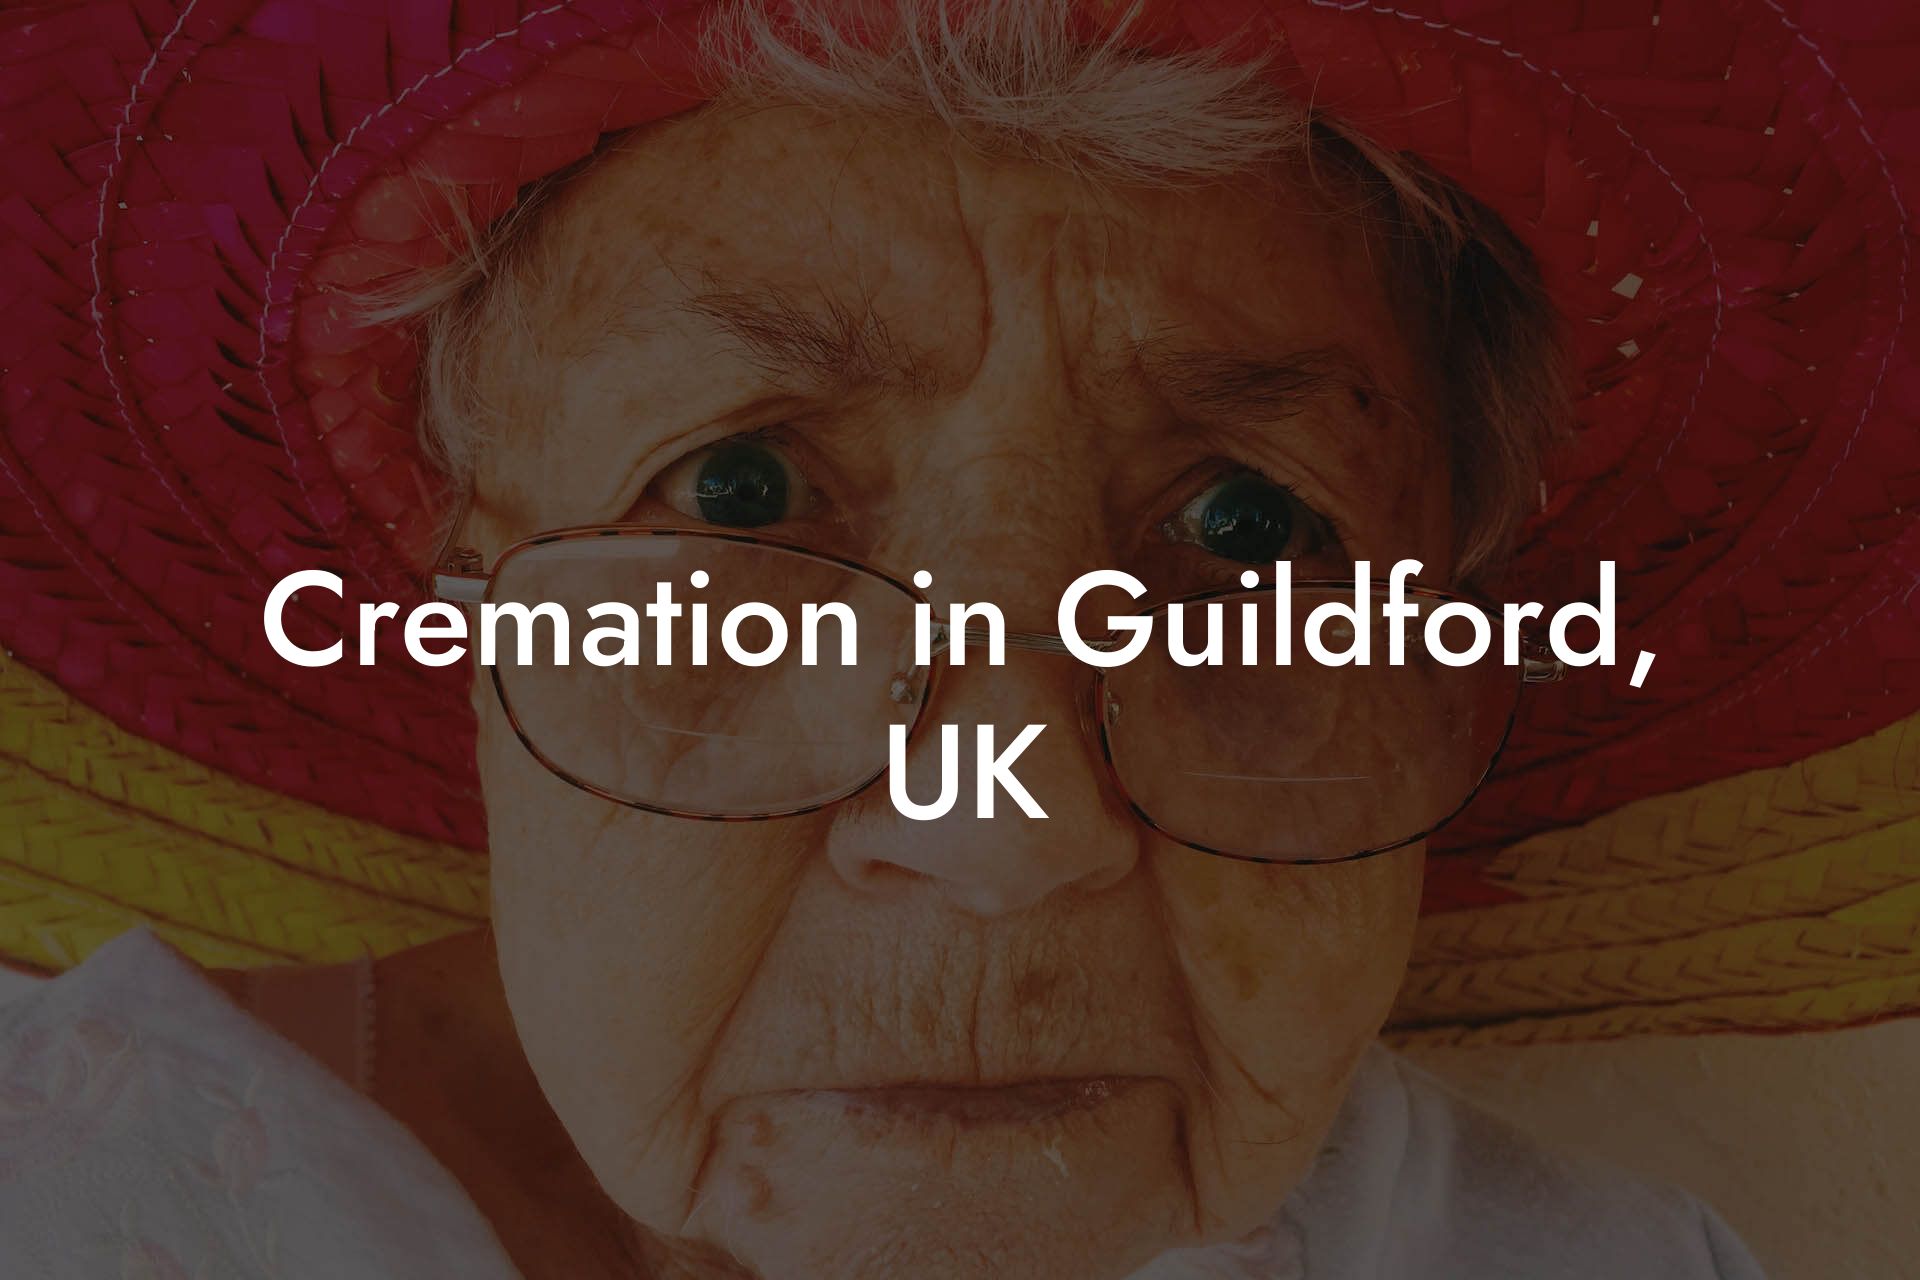 Cremation in Guildford, UK